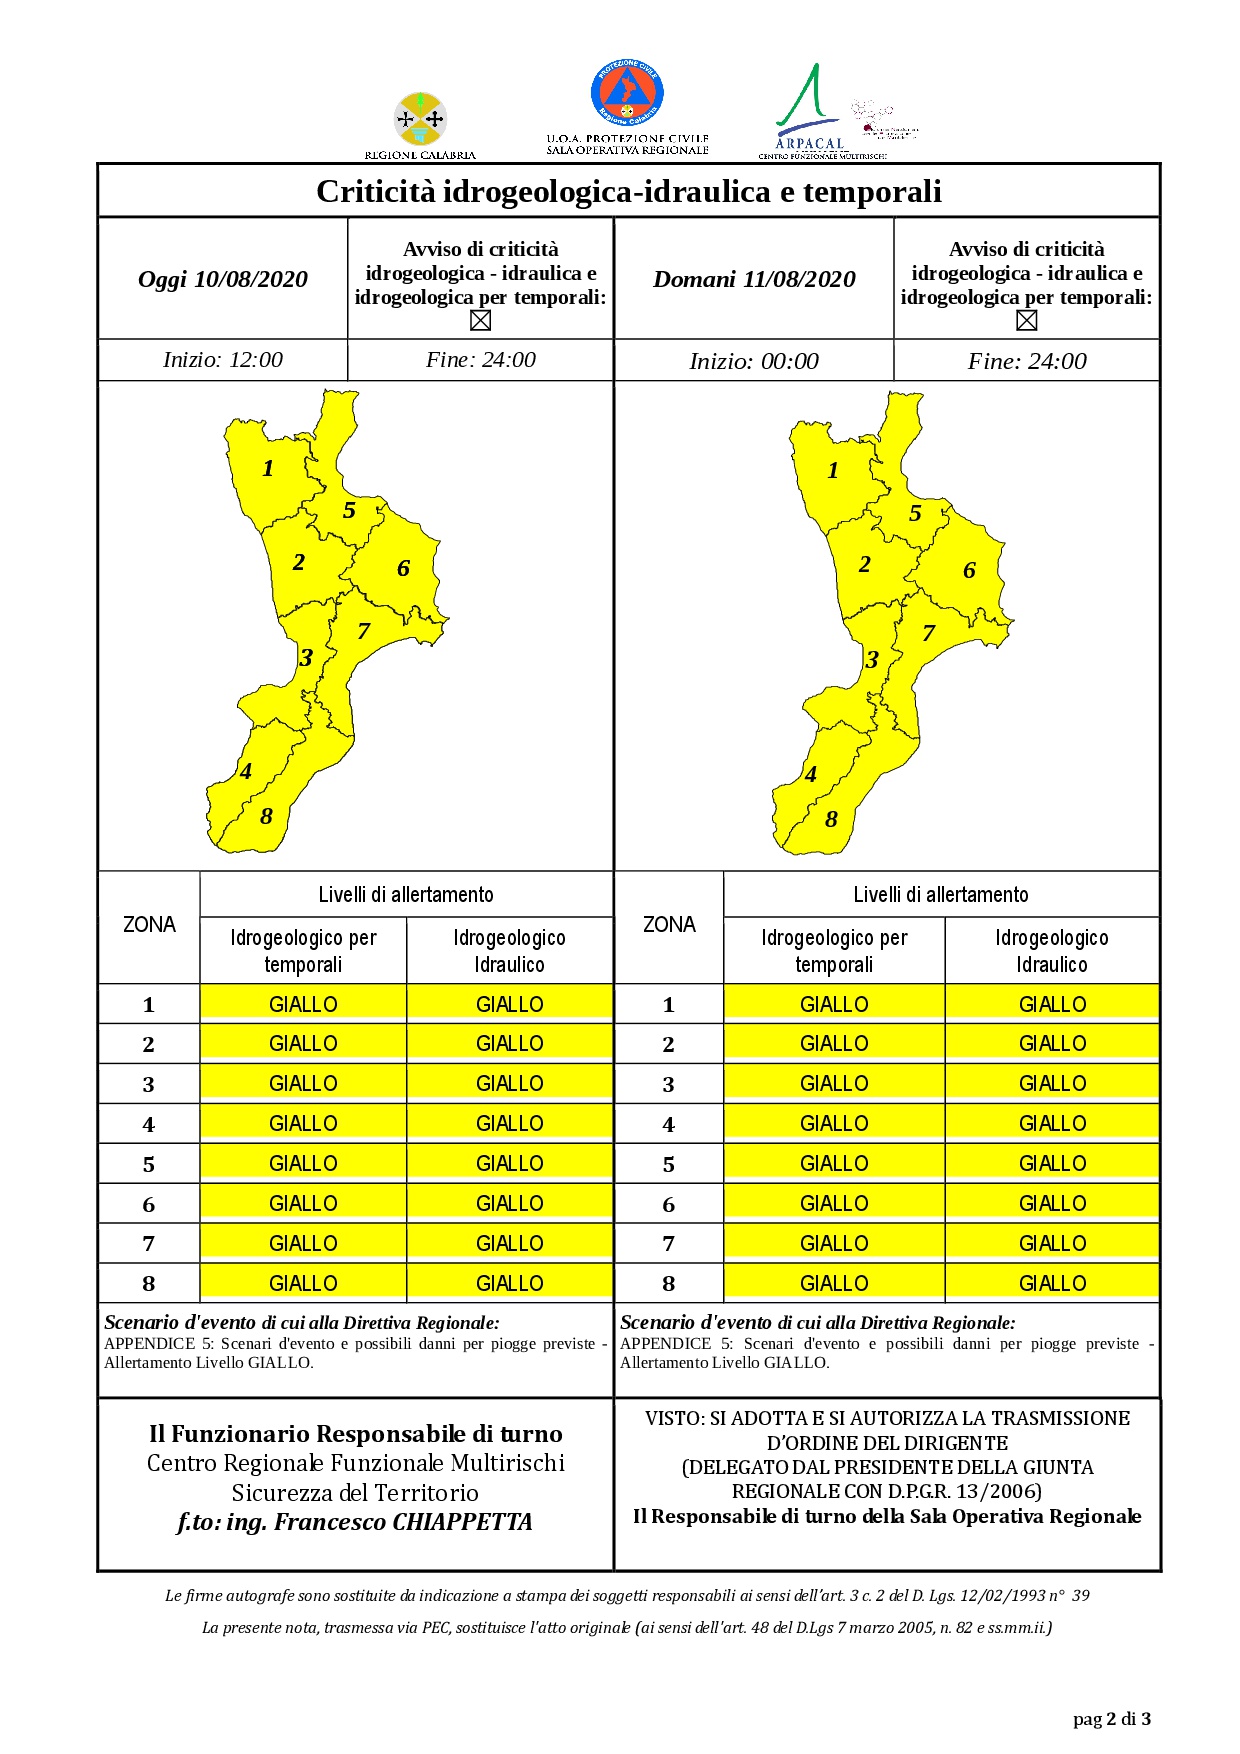 Criticità idrogeologica-idraulica e temporali in Calabria 10-08-2020